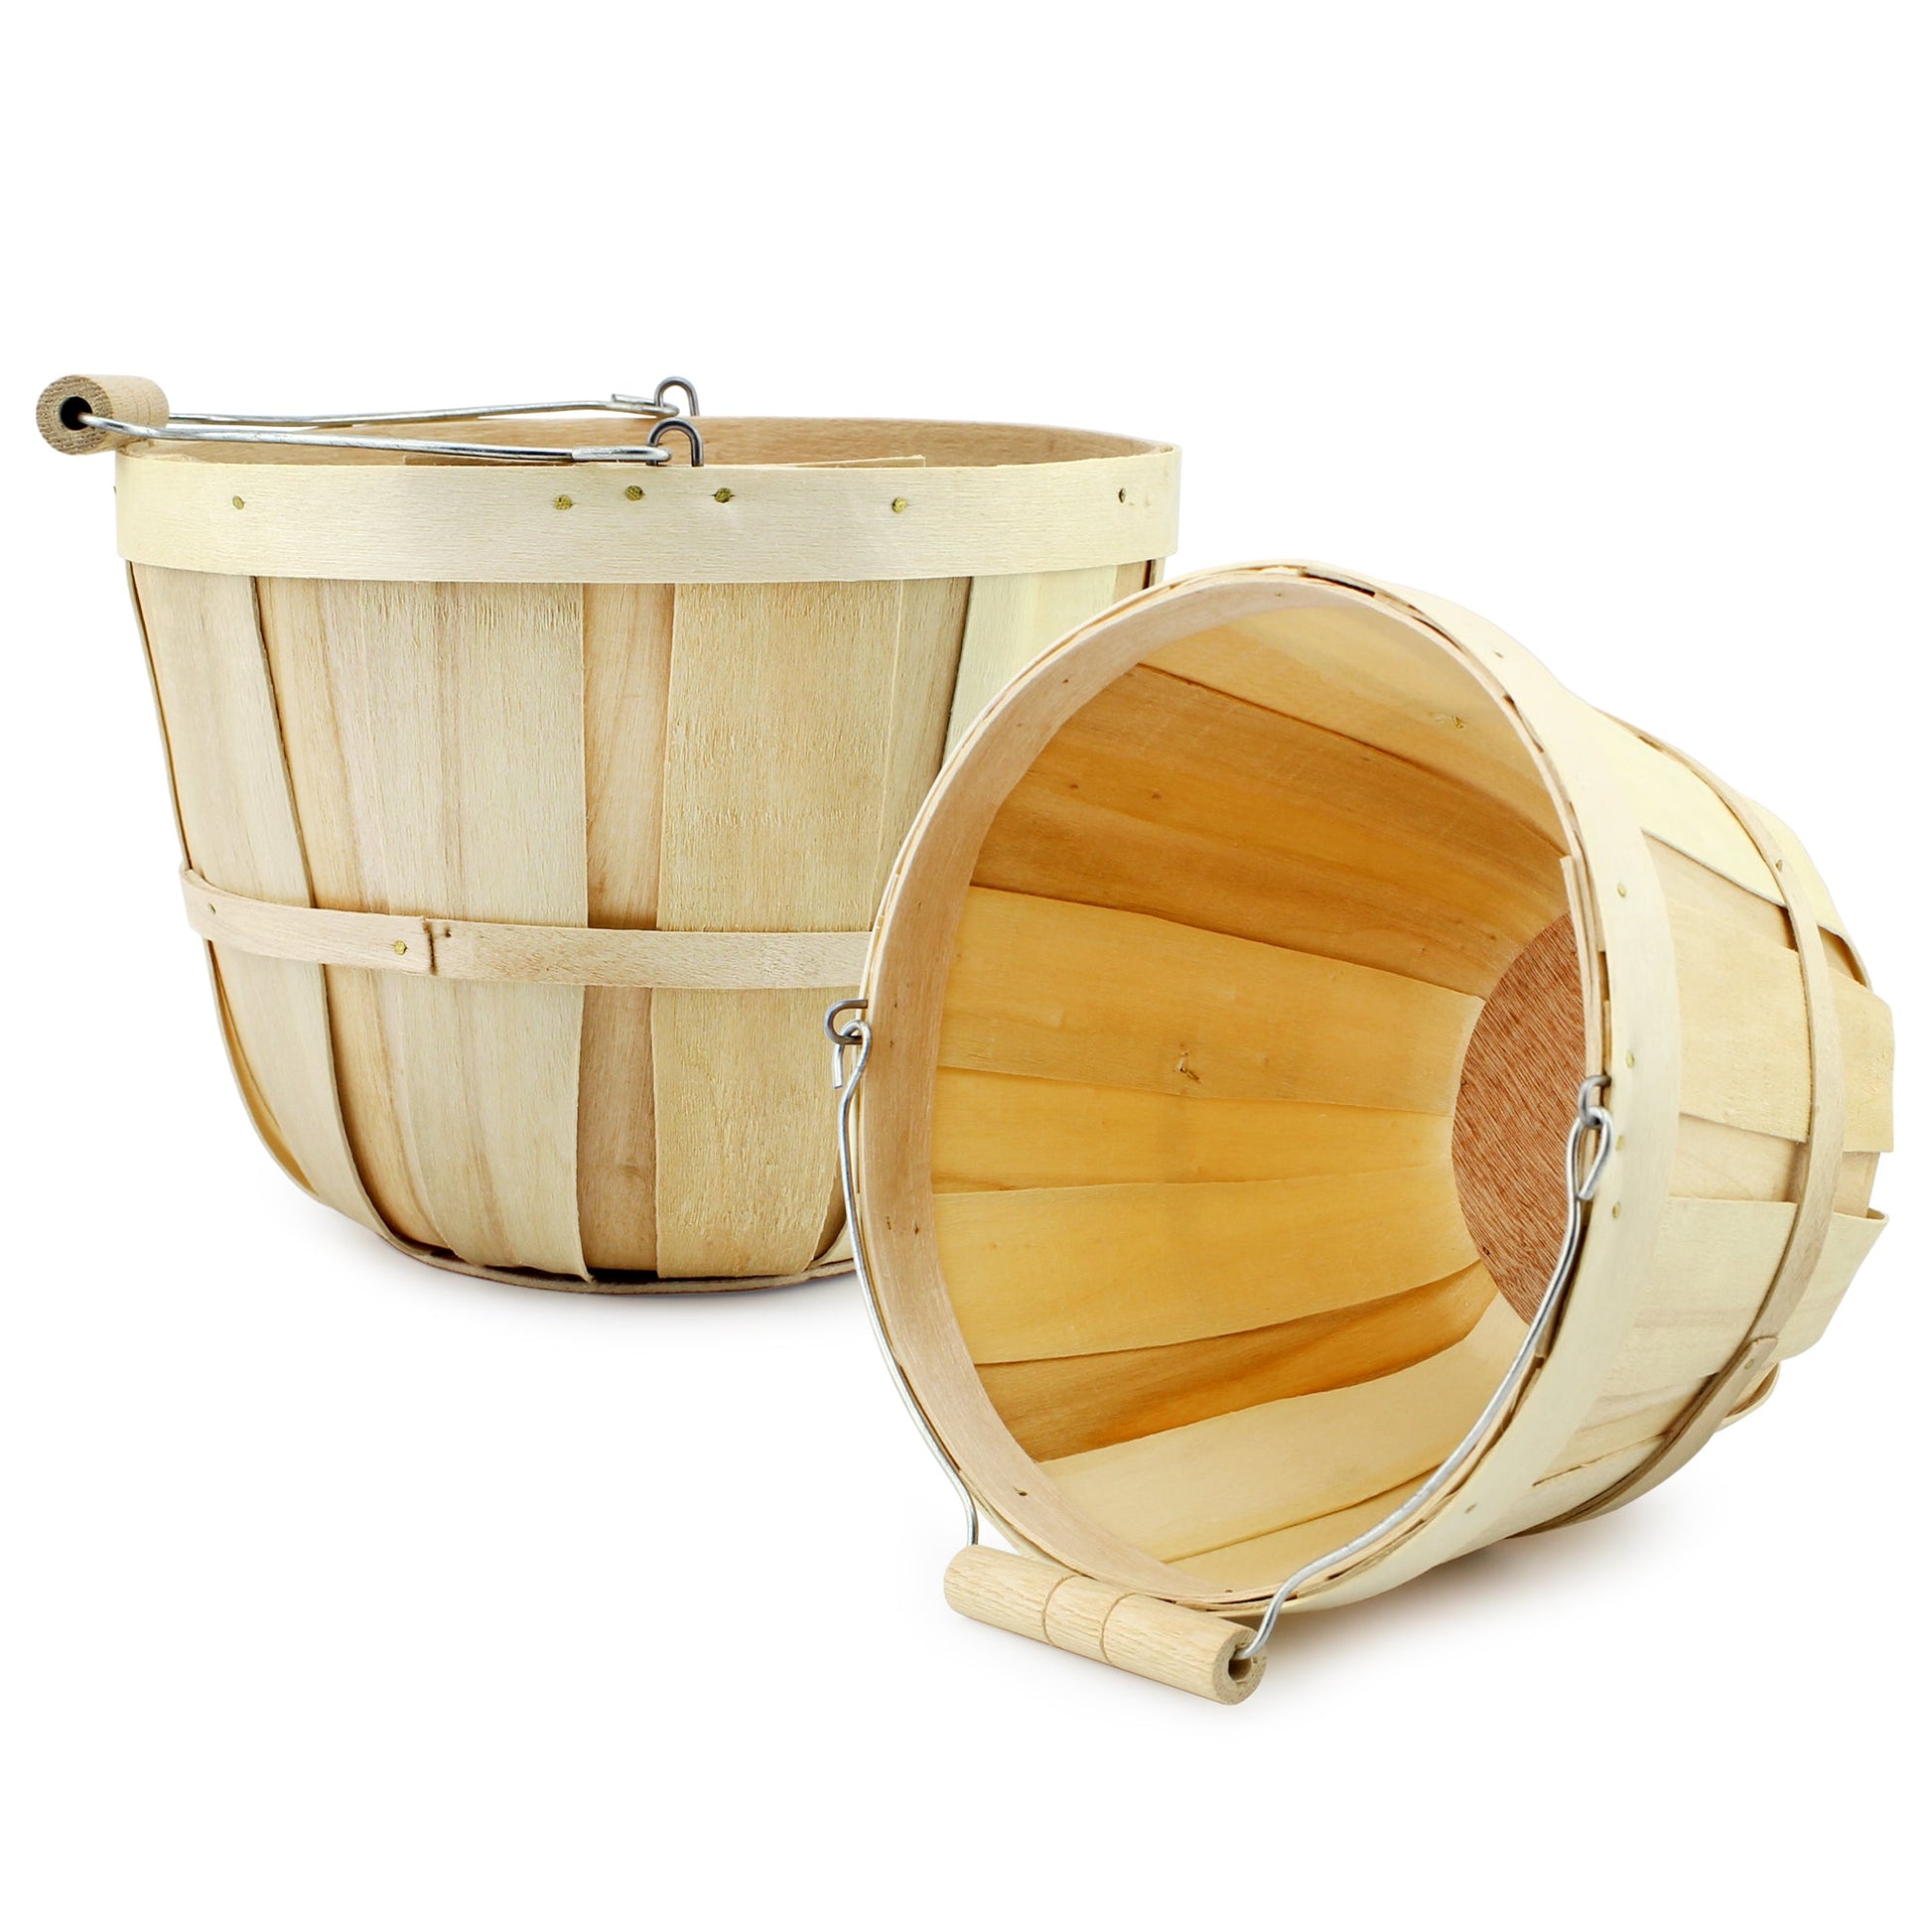 Round Wooden Baskets (2-Pack, Natural) - sh1306cb0mnw